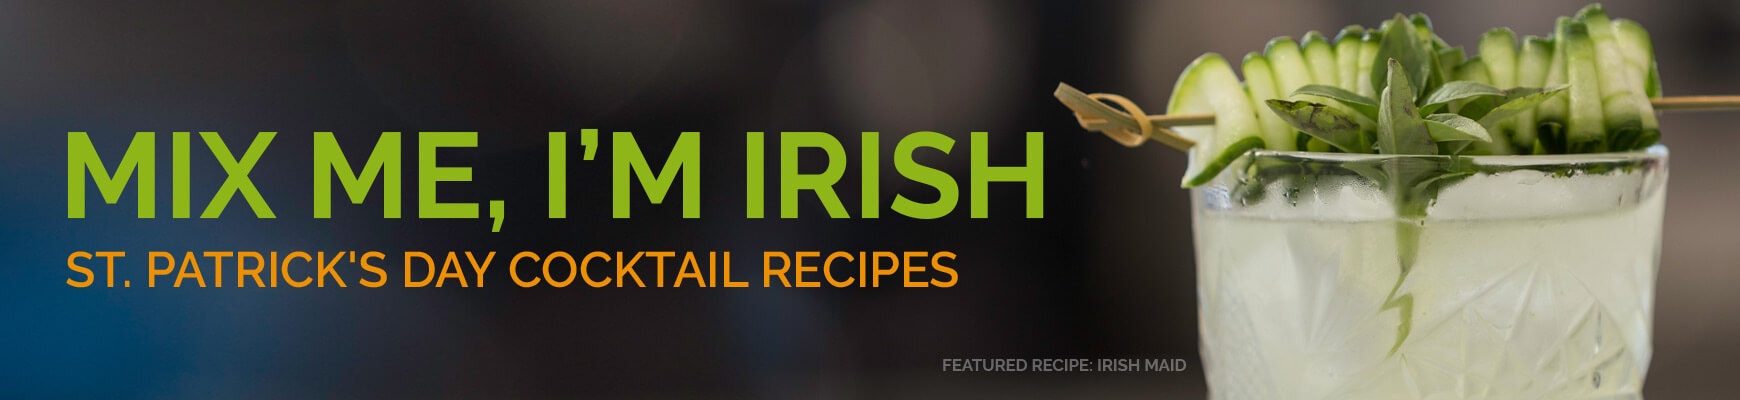 Mix Me, I’m Irish: St. Patrick's Day Cocktail Recipes